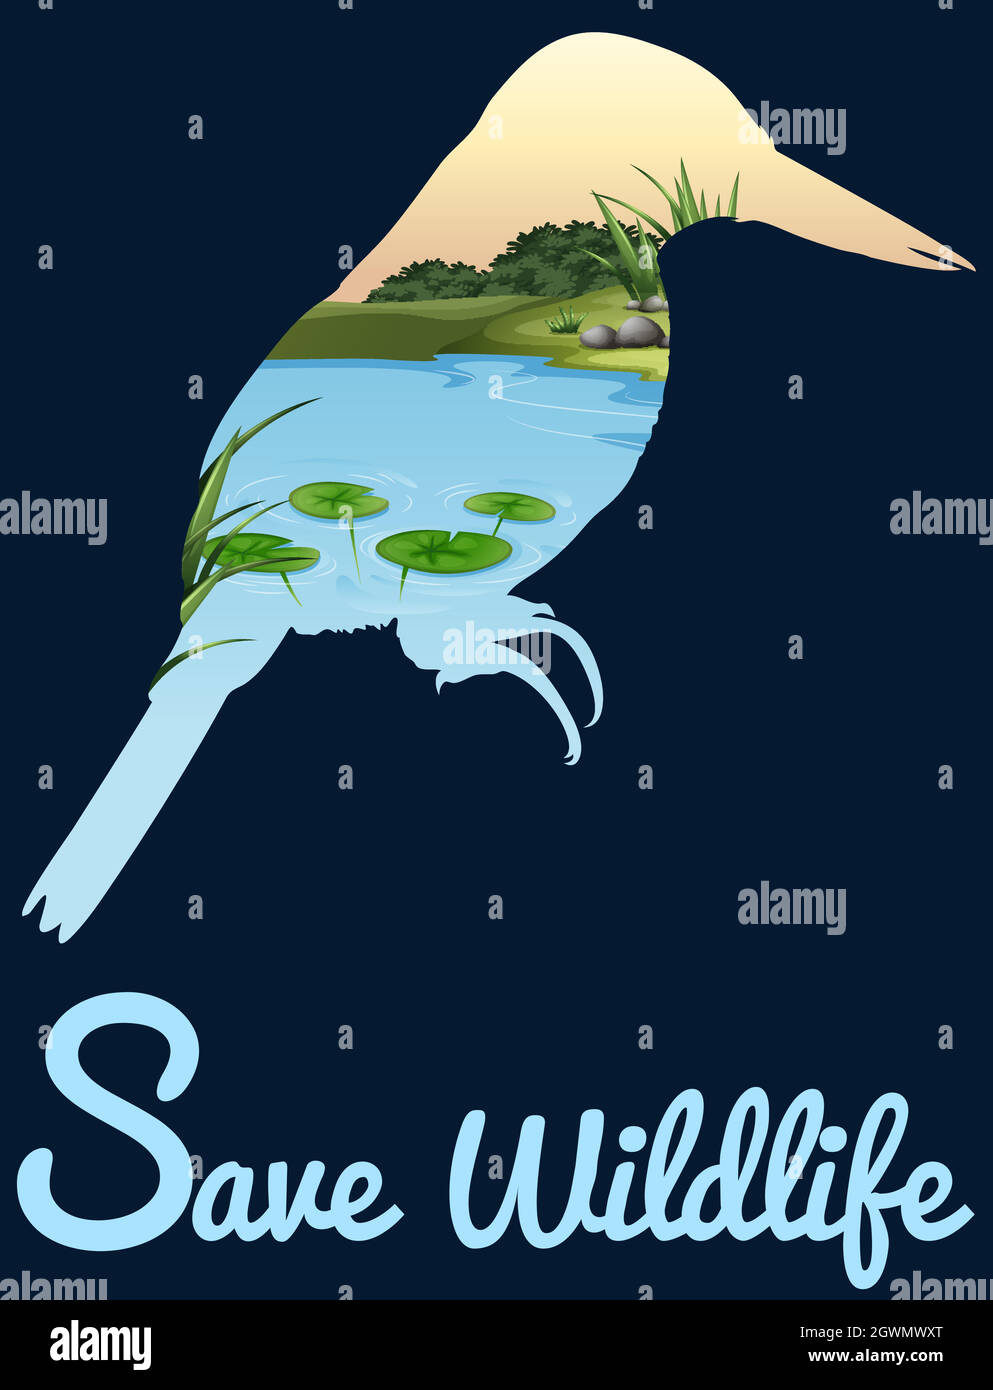 Save wildlife design with wild bird Stock Vector